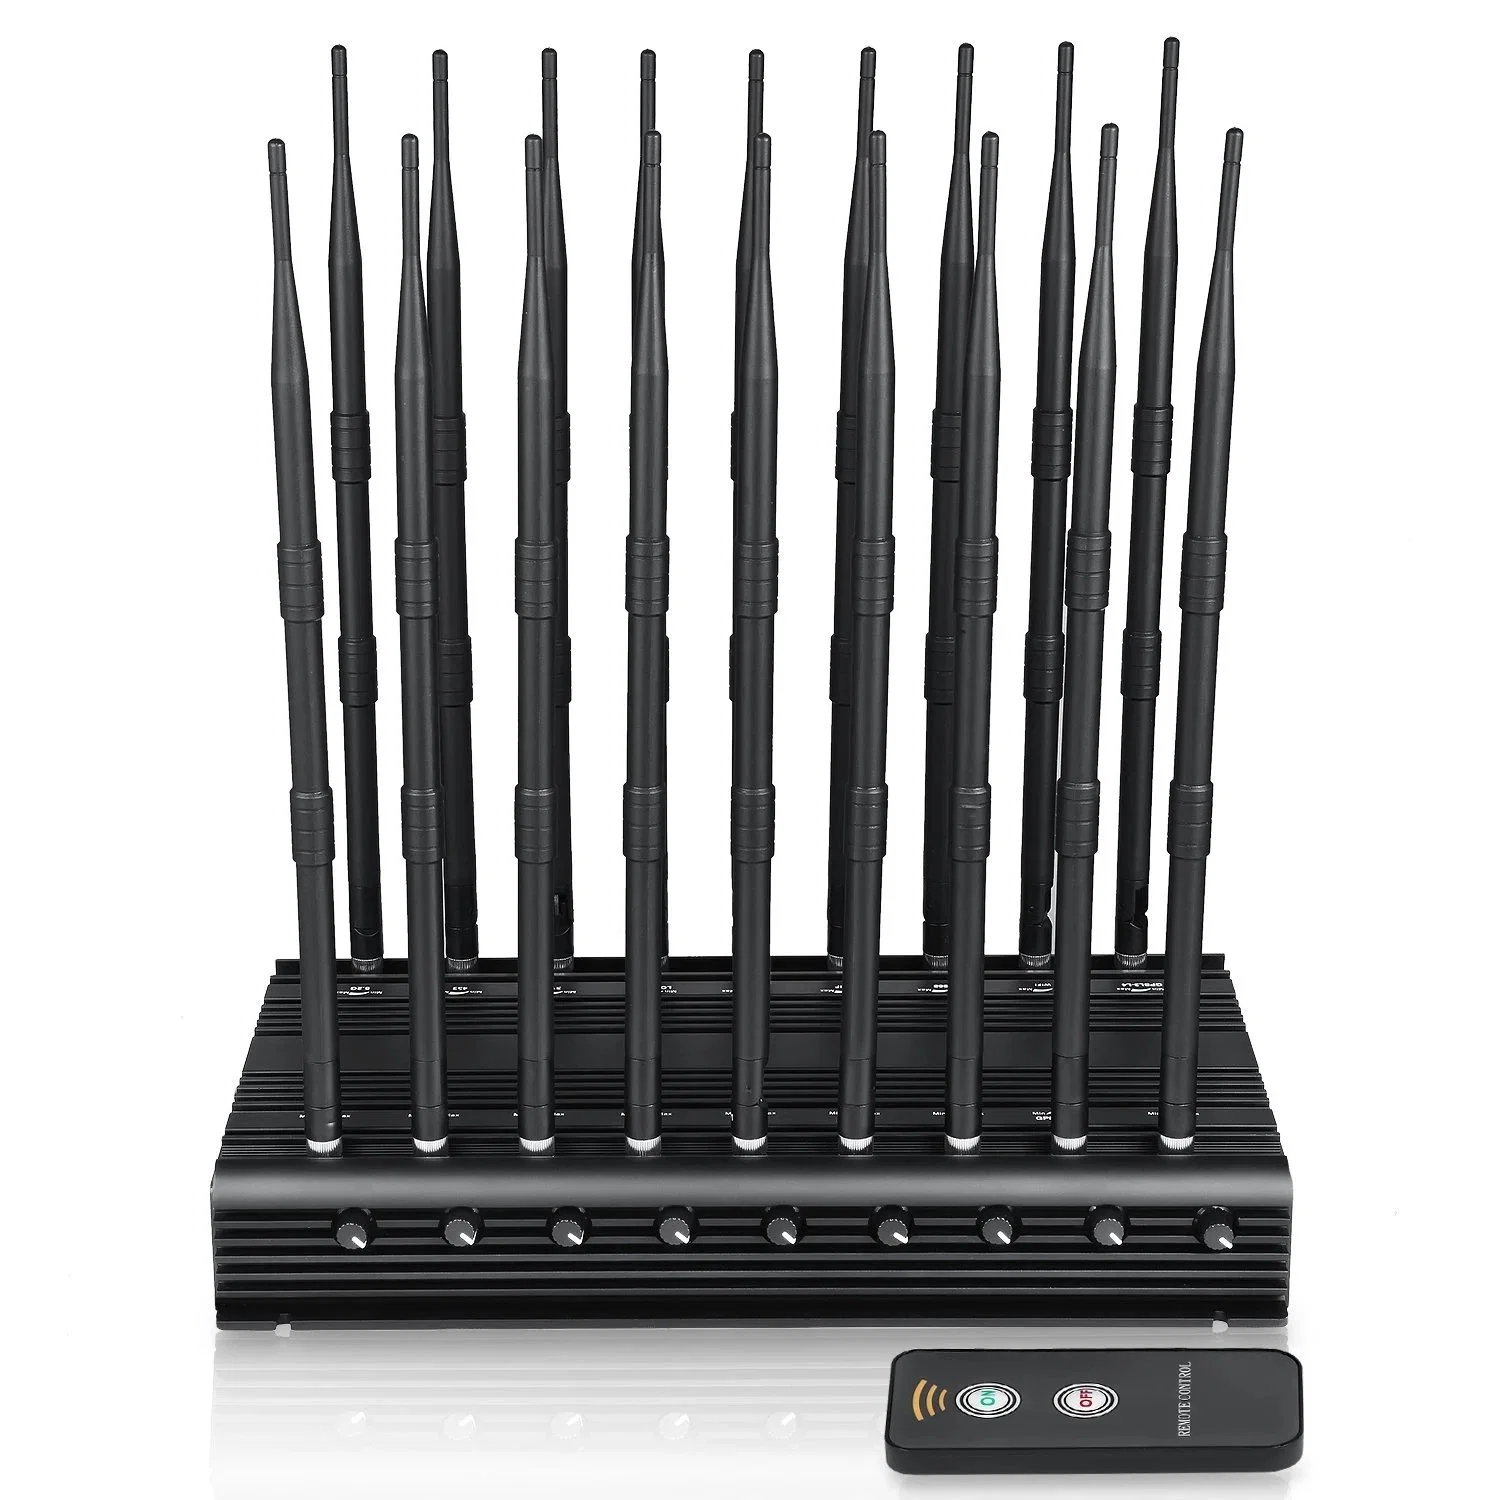 18 antenas 4G 5G móvil celular Jammer señal con mando a distancia para GPS L1 L2 L4 L5 Lojack WiFi 2G 3G